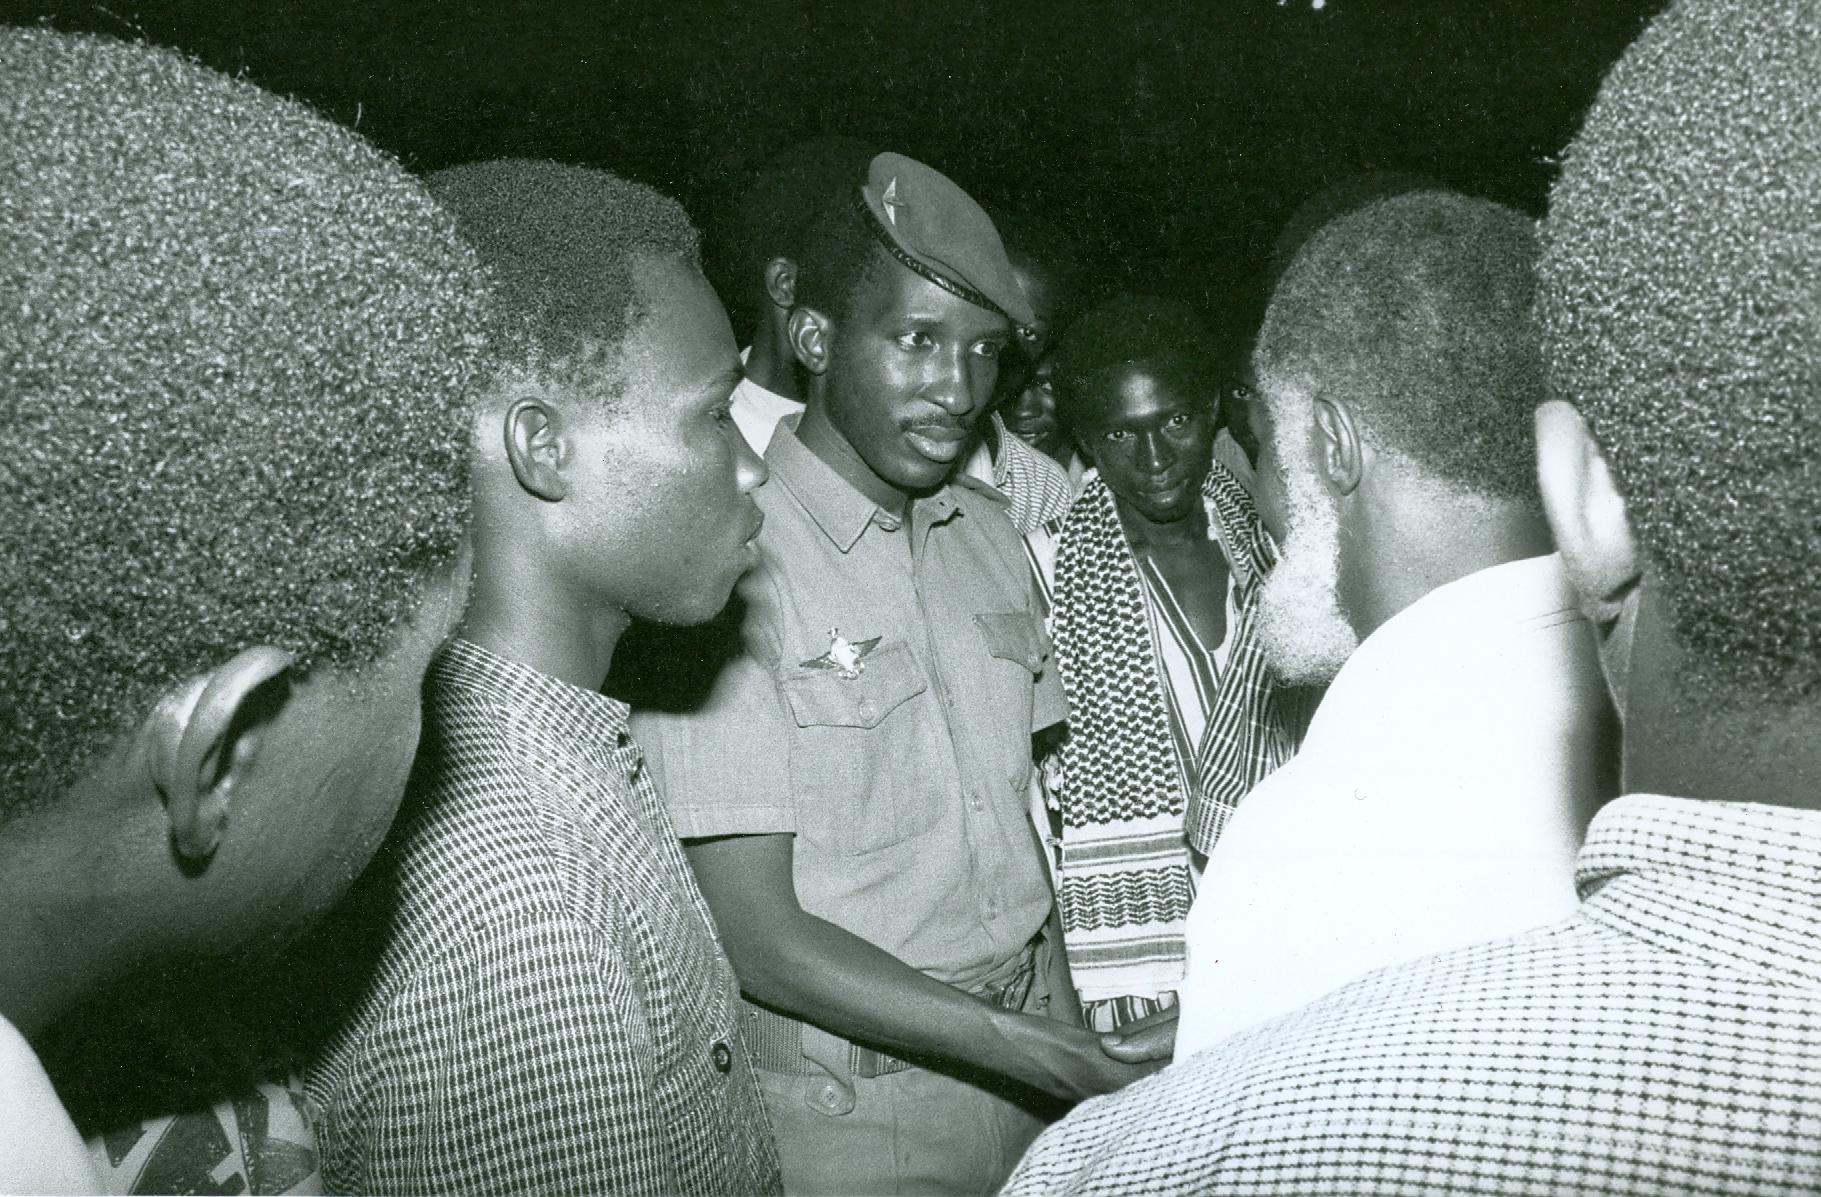 The former president of Burkina Faso, Thomas Sankara